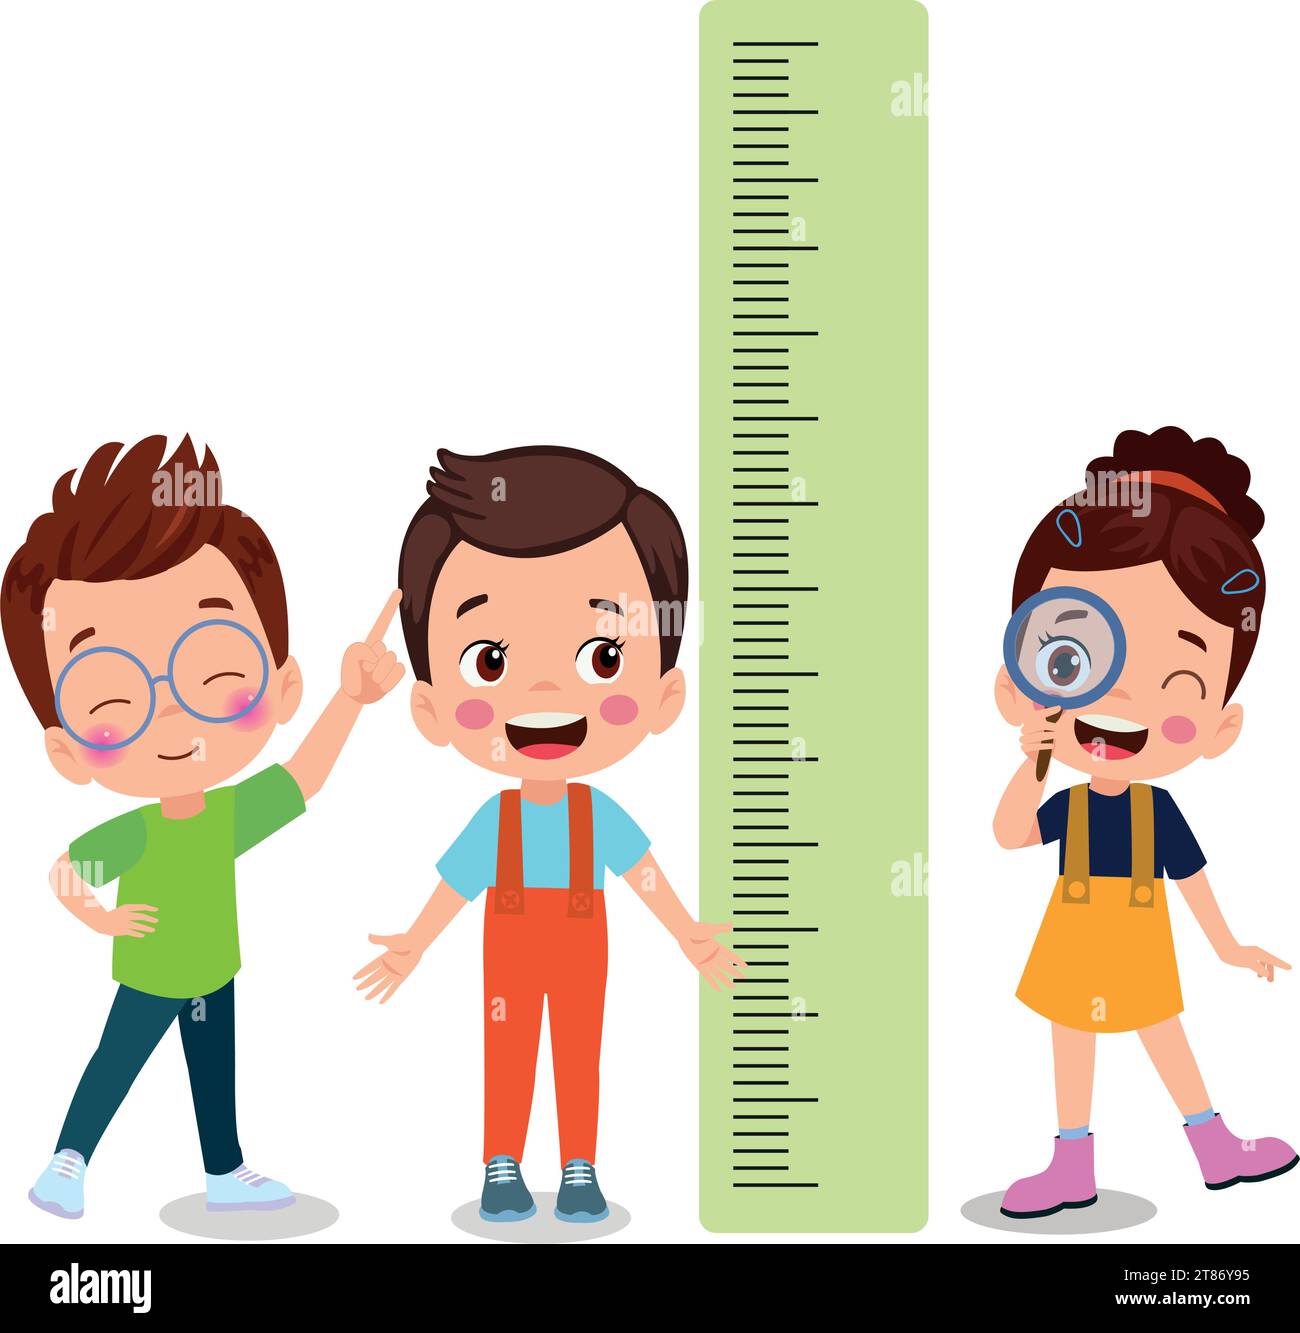 https://c8.alamy.com/comp/2T86Y95/height-measure-for-little-children-2T86Y95.jpg